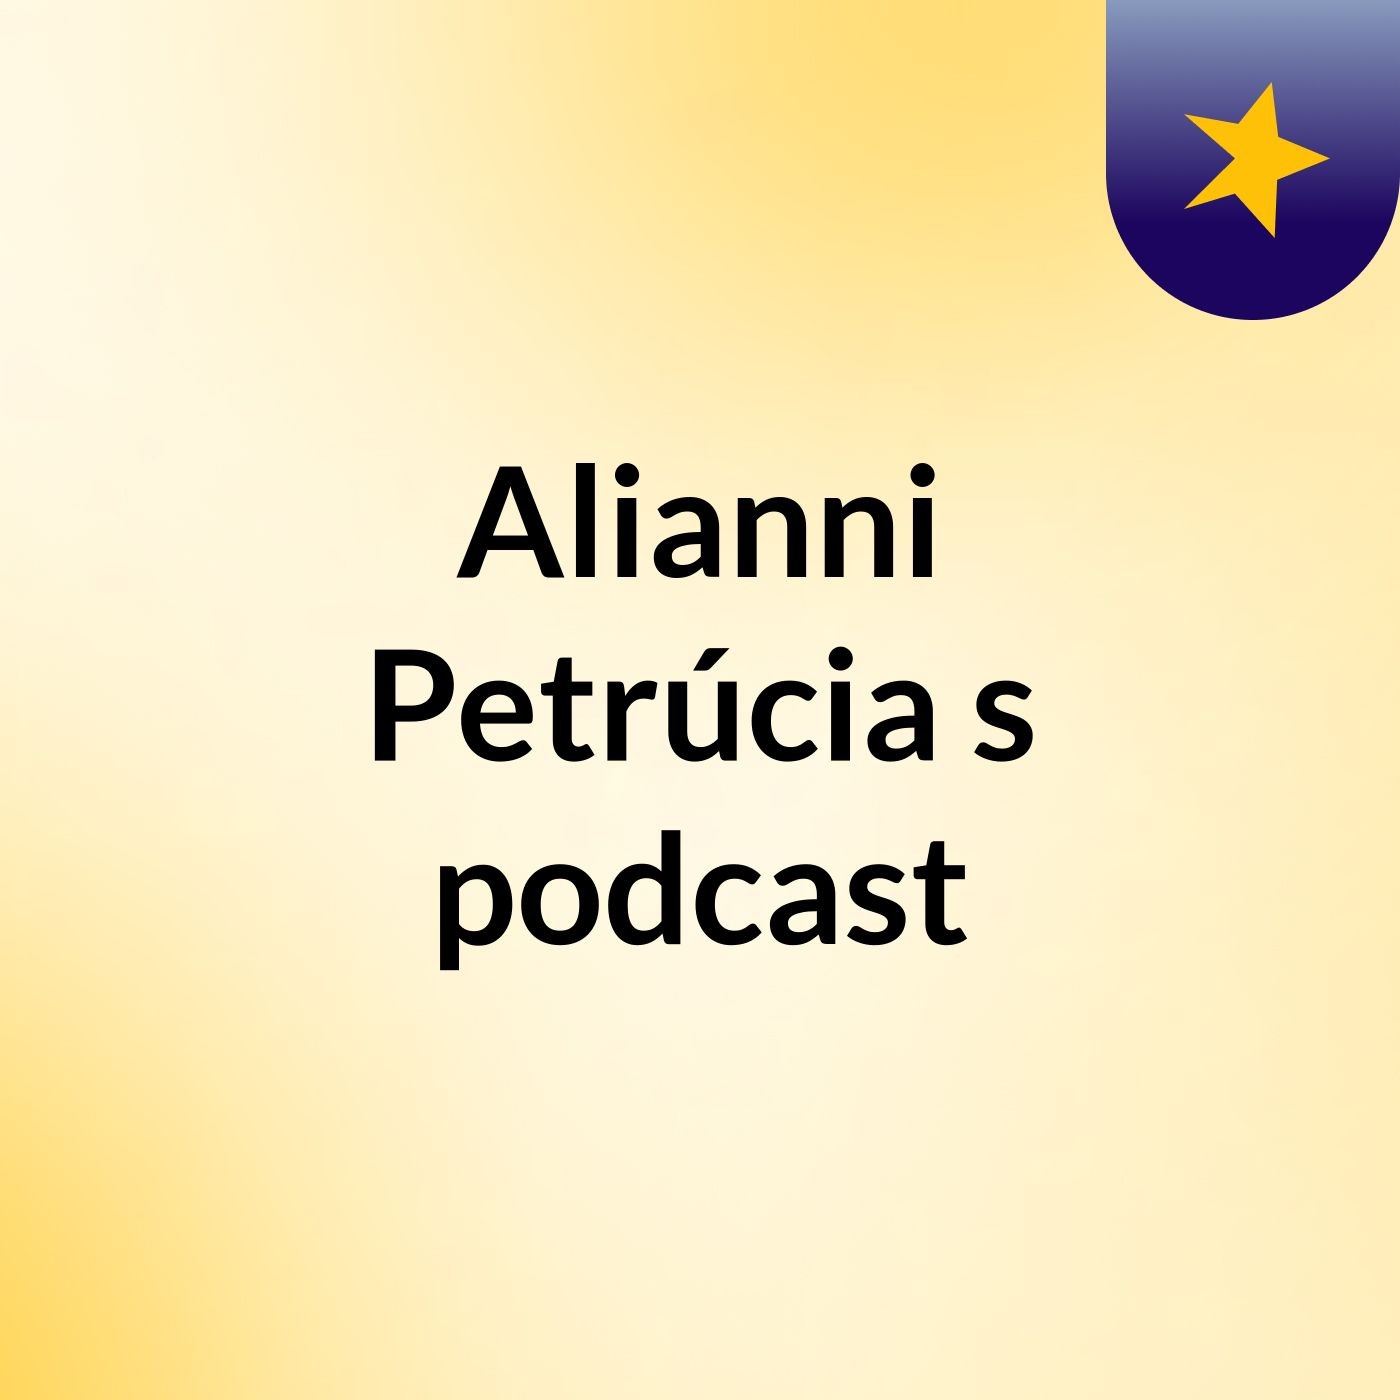 Alianni Petrúcia's podcast